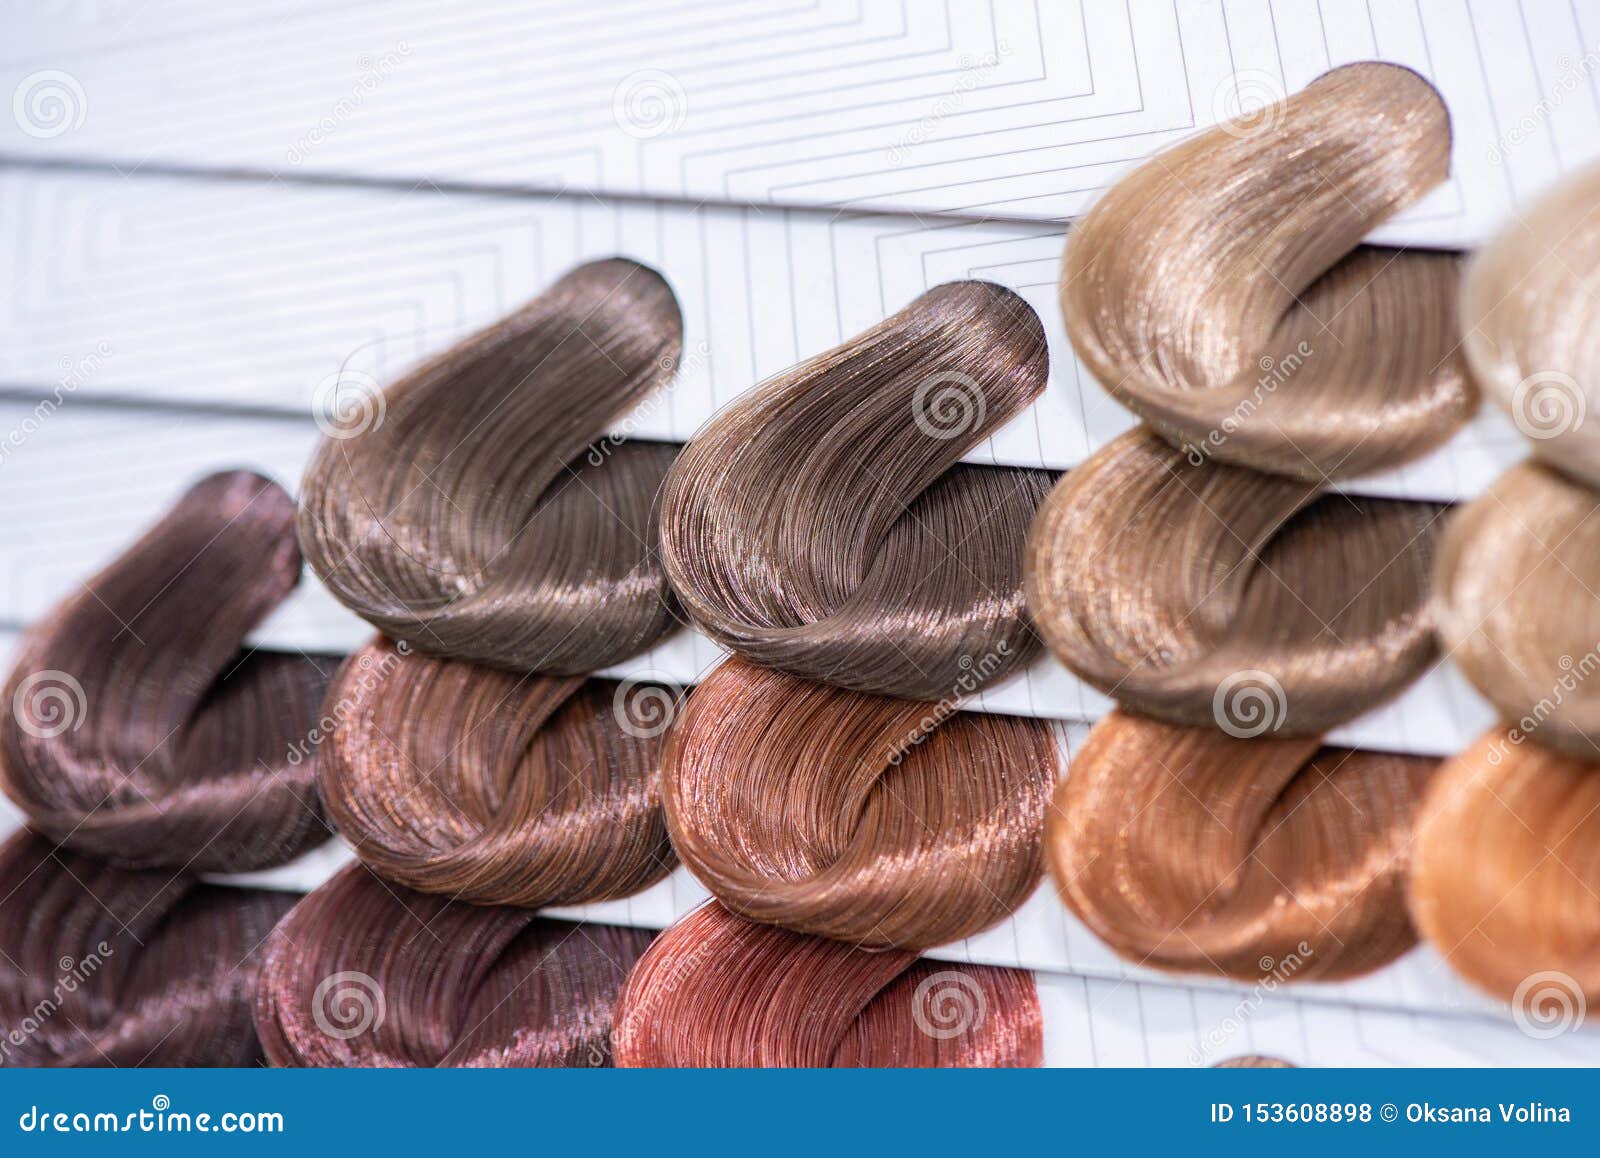 Sample Hair Colors Chart